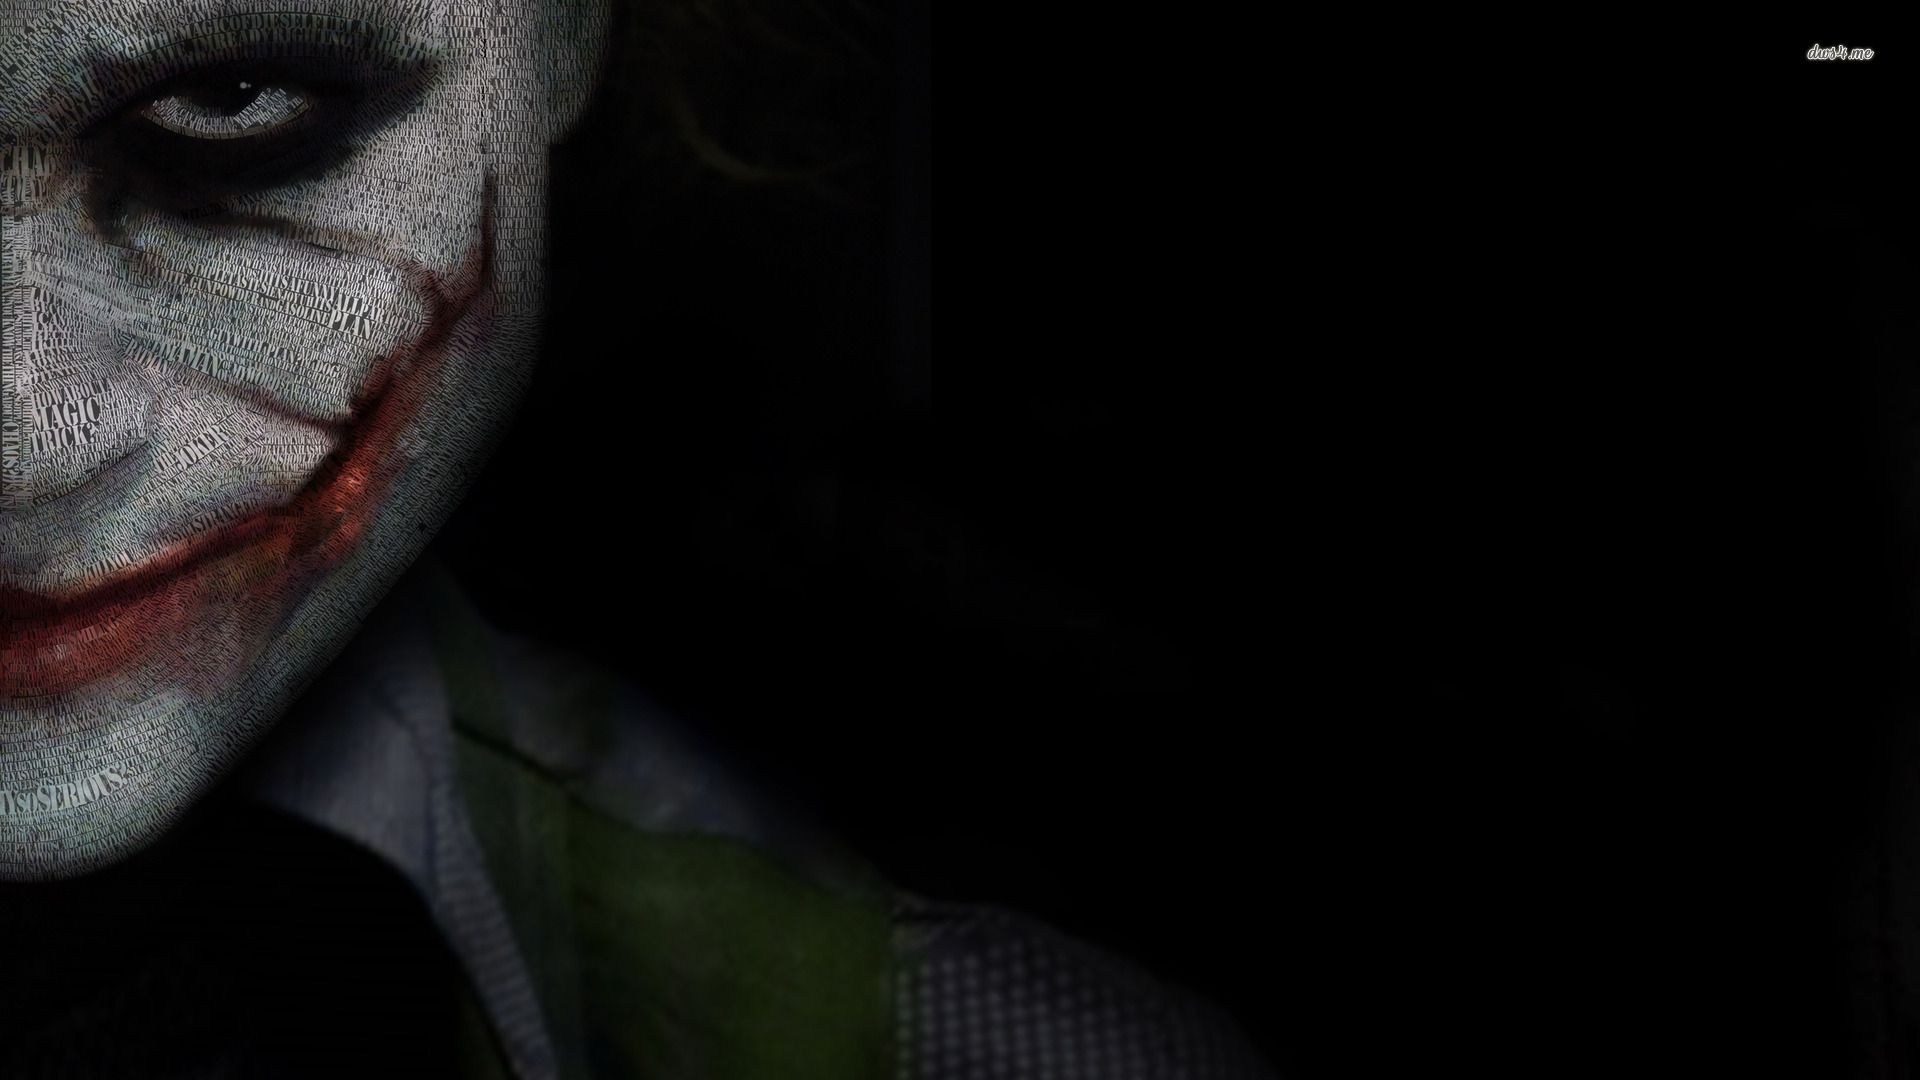 Joker - The Dark Knight Rises wallpaper - Movie wallpapers - #9310